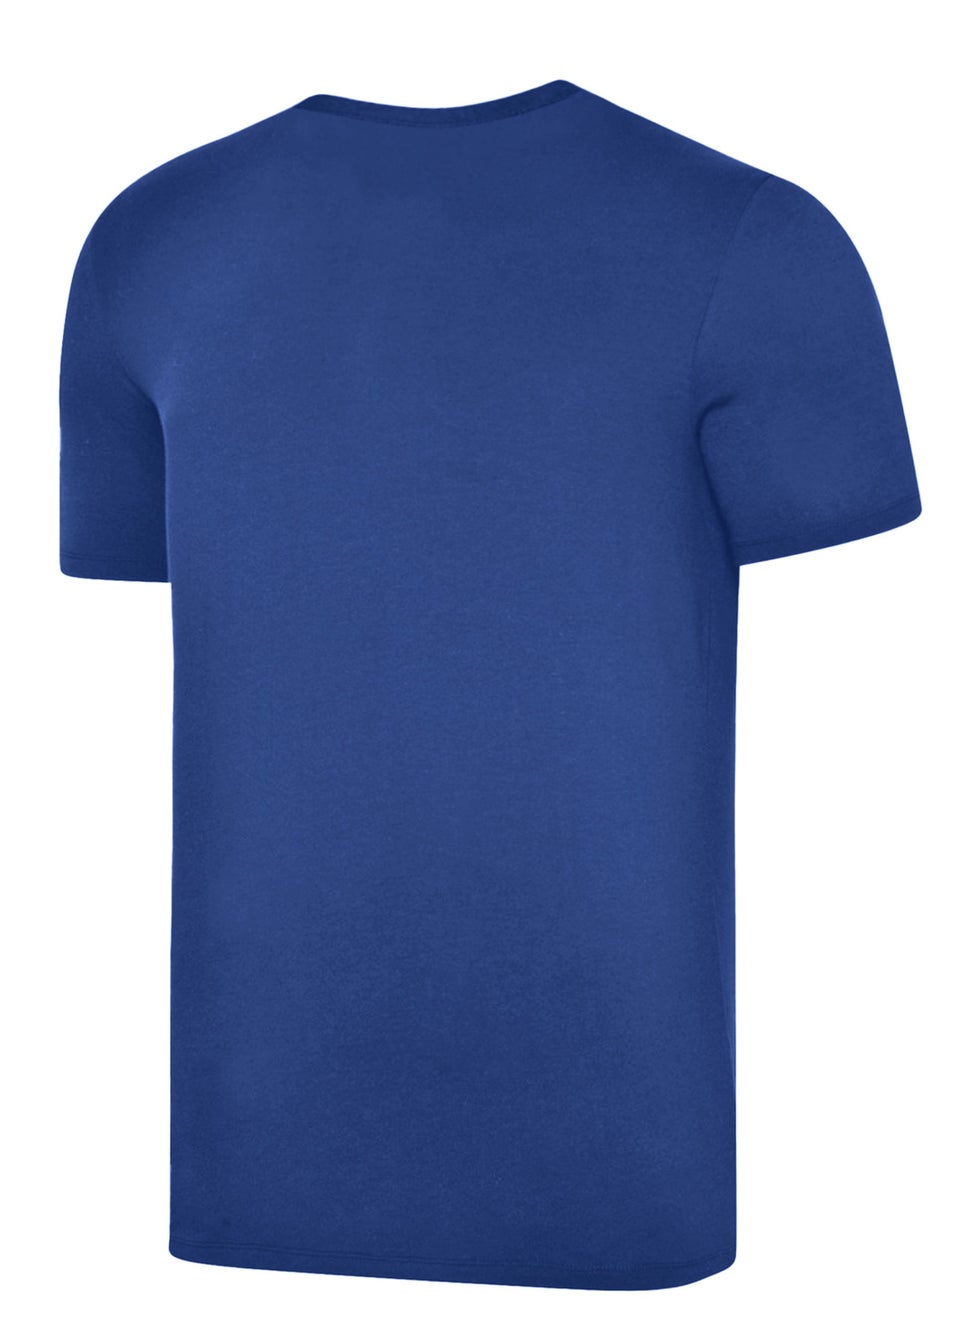 Umbro Kids Midnight Blue Club Leisure T-Shirt (7-10yrs)